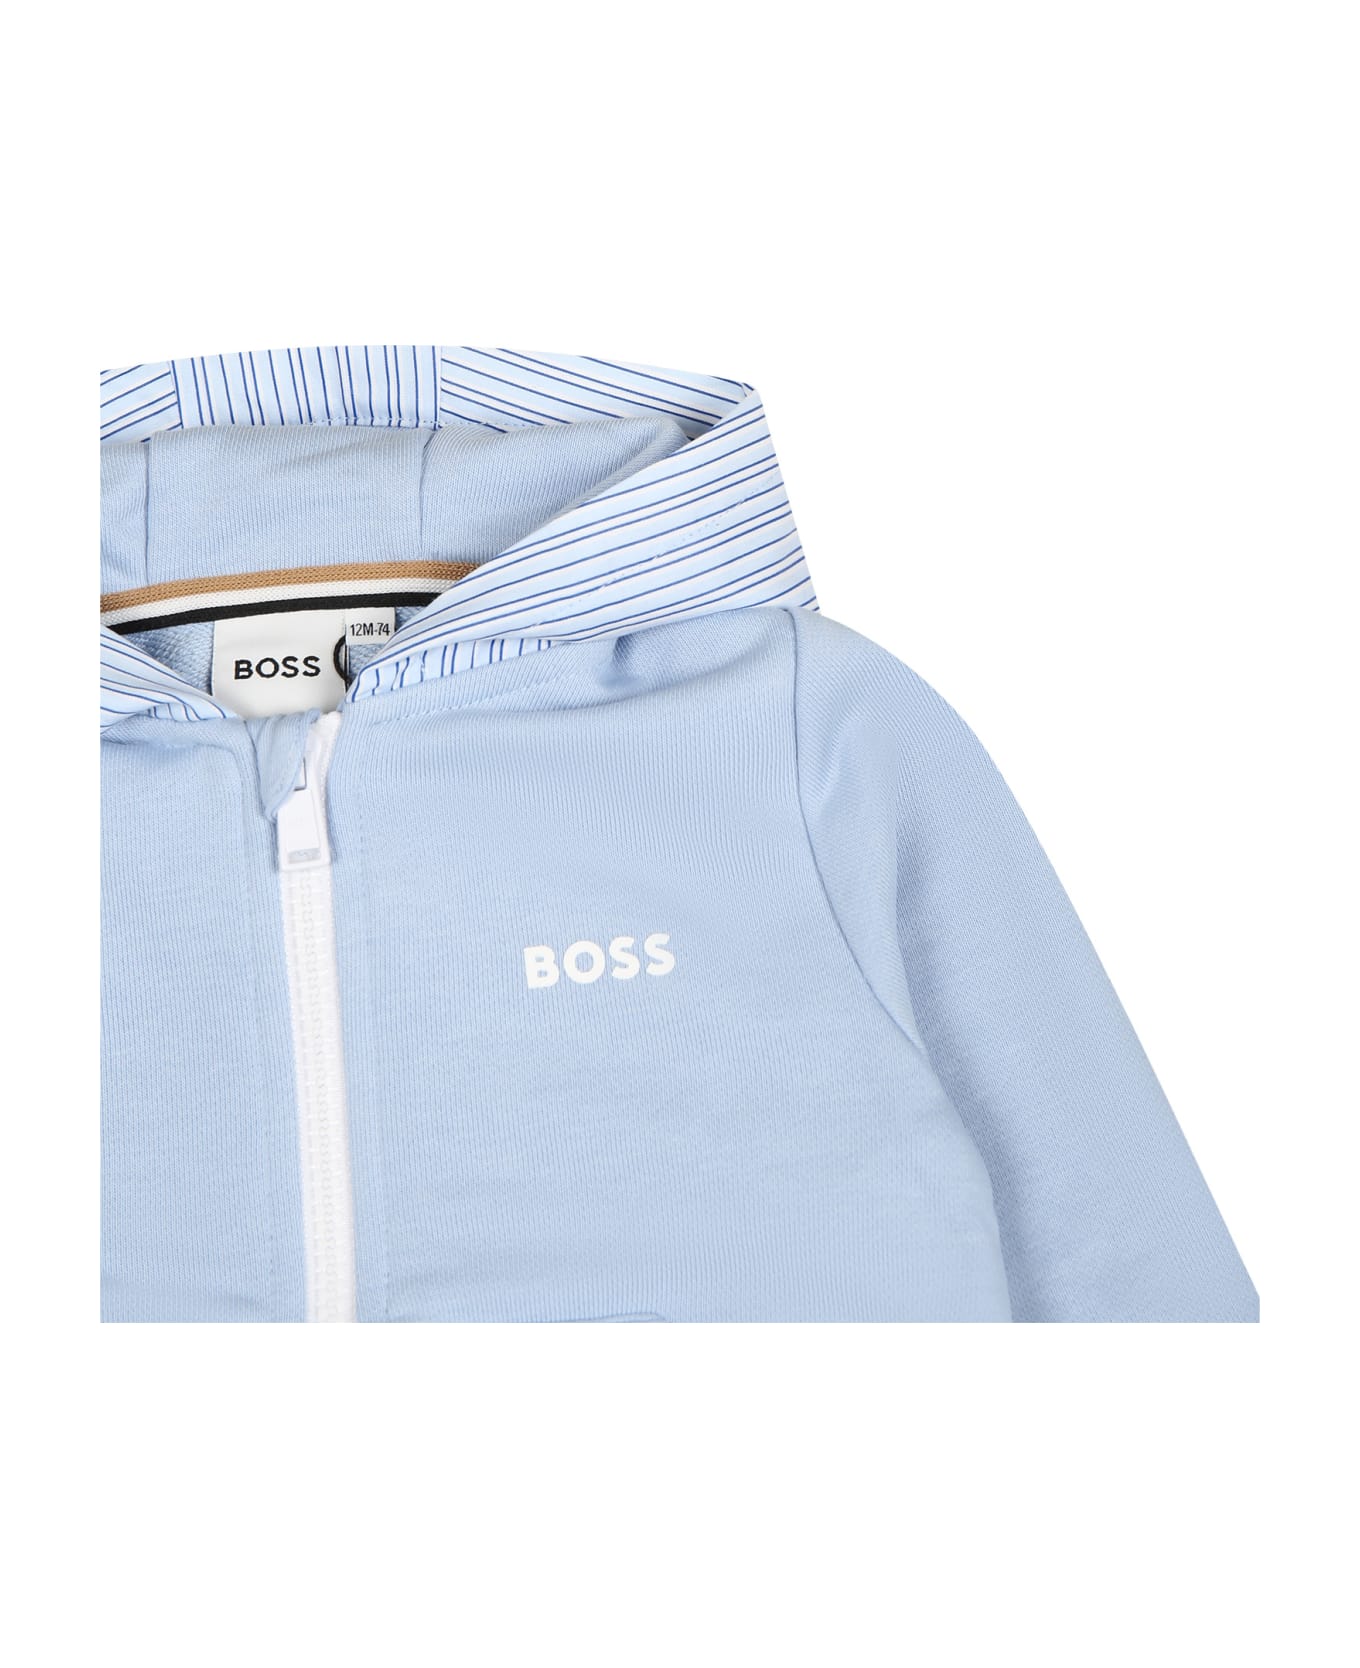 Hugo Boss Light Blue Suit For Baby Boy With Logo - Light Blue